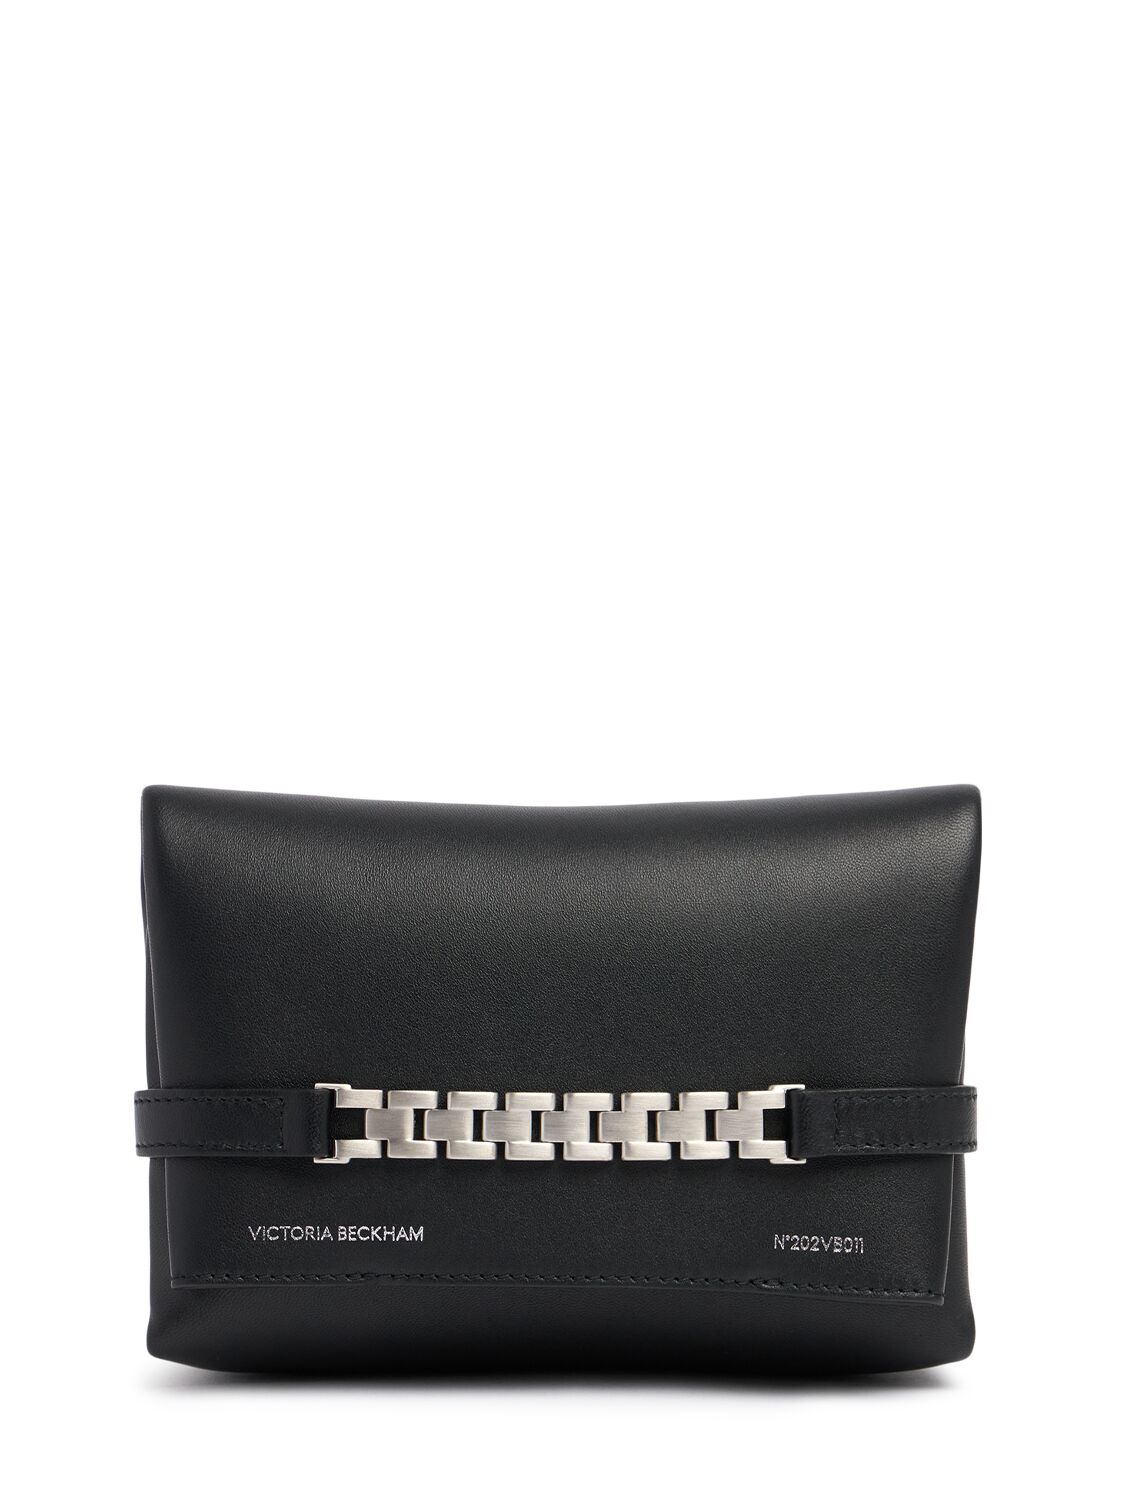 Victoria Beckham Mini Chain Napa Leather Clutch In Black